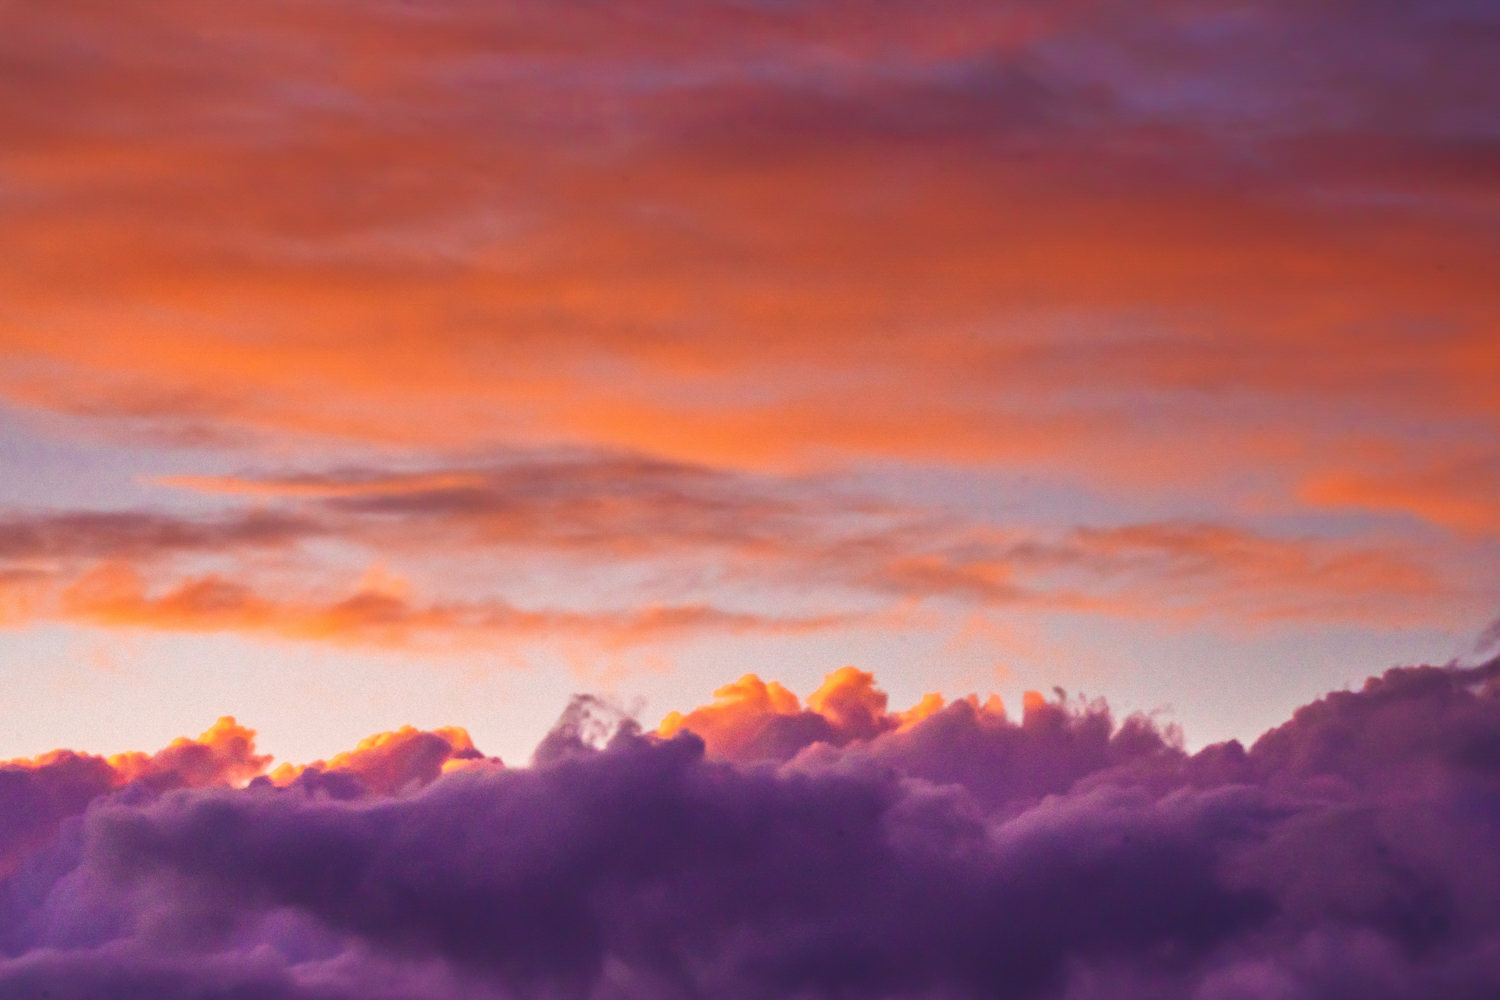 Purple and orange clouds